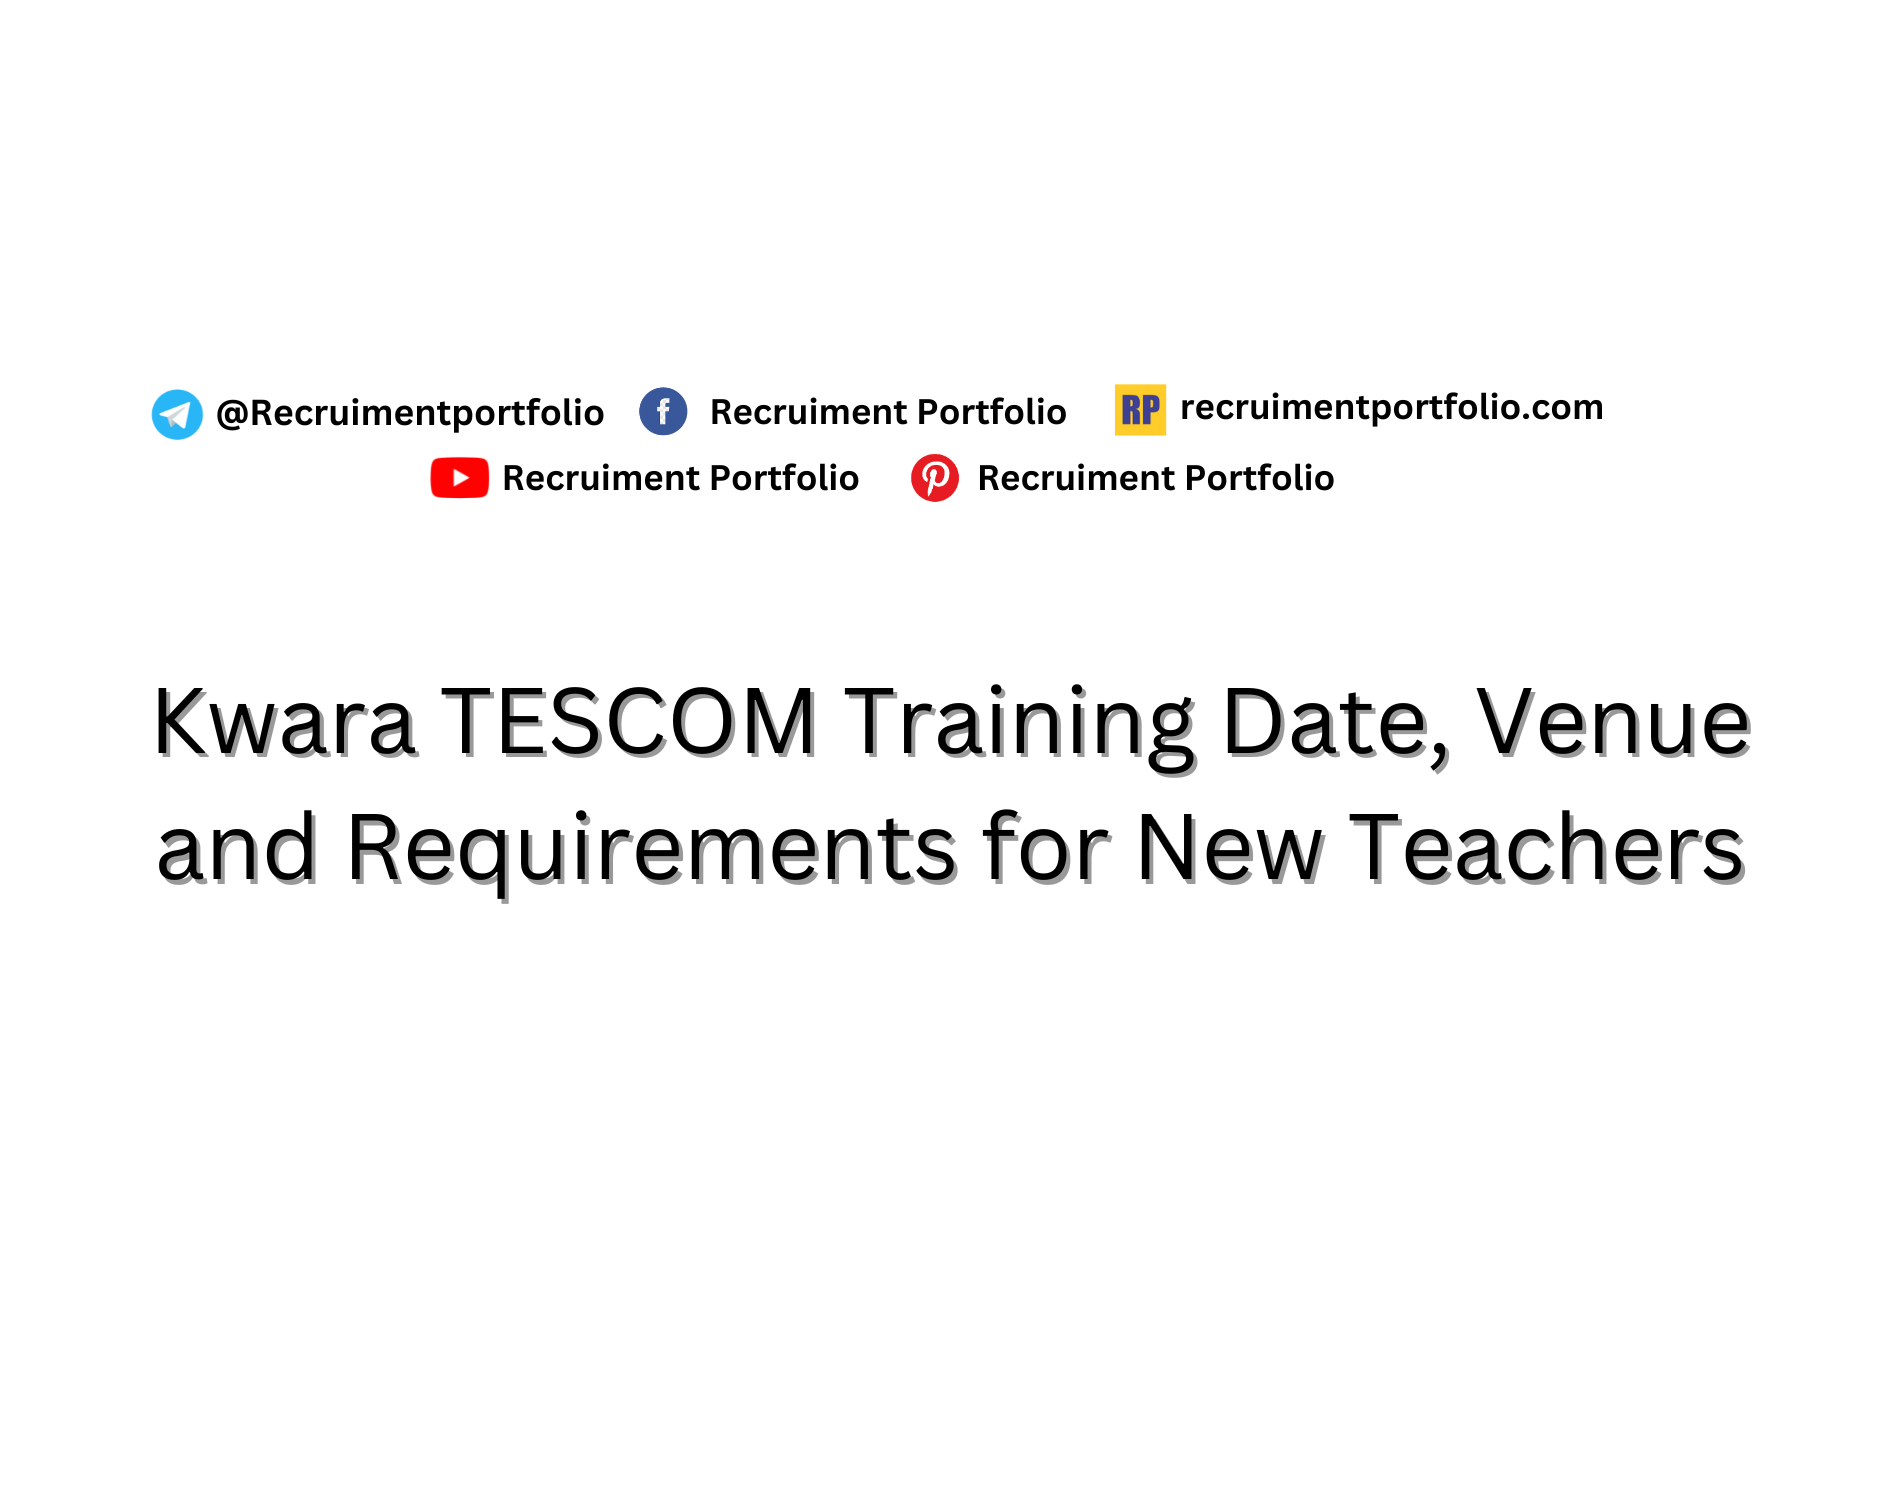 Kwara TESCOM Training Date